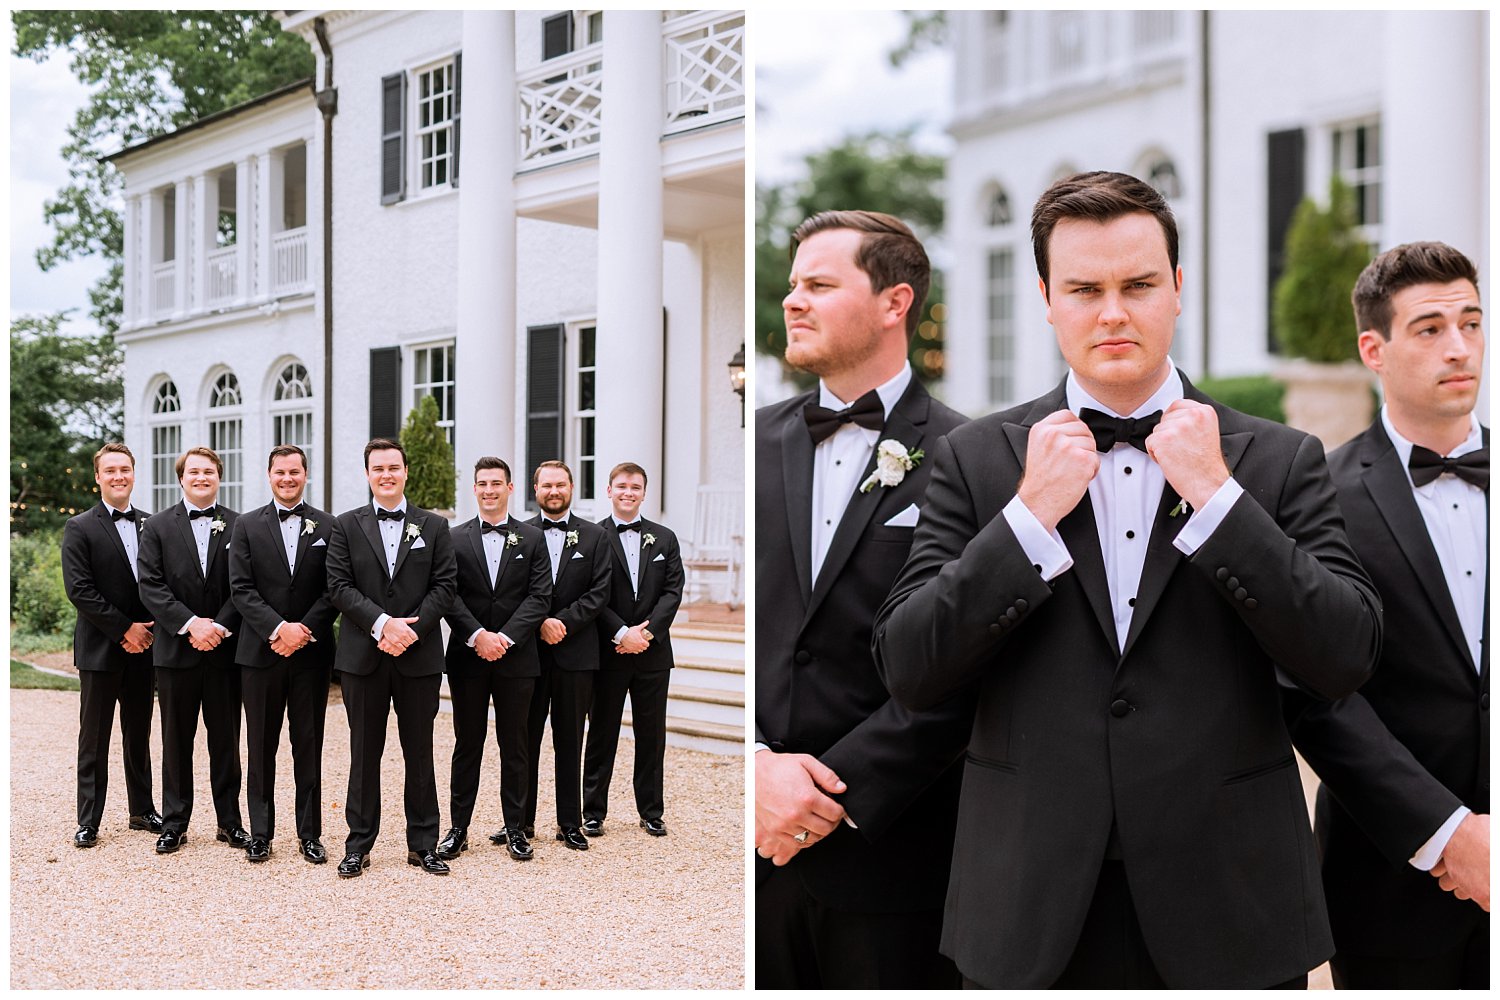 Groom and groomsmen portraits for a Virginia vineyard wedding